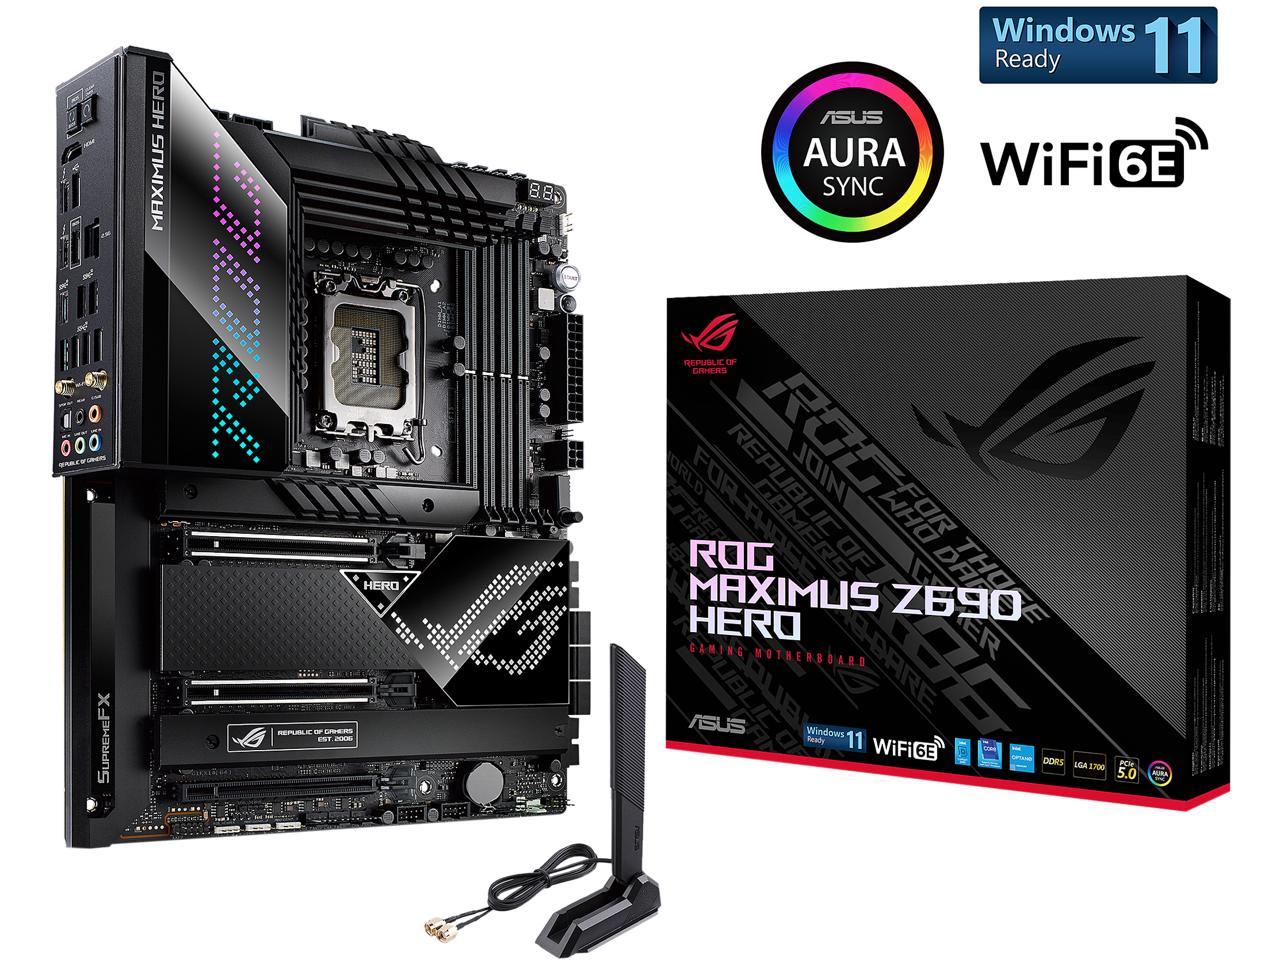 ASUS ROG Maximus Z690 Hero (WiFi 6E) LGA 1700 Intel 12th Gen ATX Gaming Motherboard- PCIe 5.0, DDR5, 20+1 90A Power Stages, 2.5Gb LAN, Bluetooth V5.2, 2x Thunderbolt 4 ports, 5xM.2/NVMe SSD